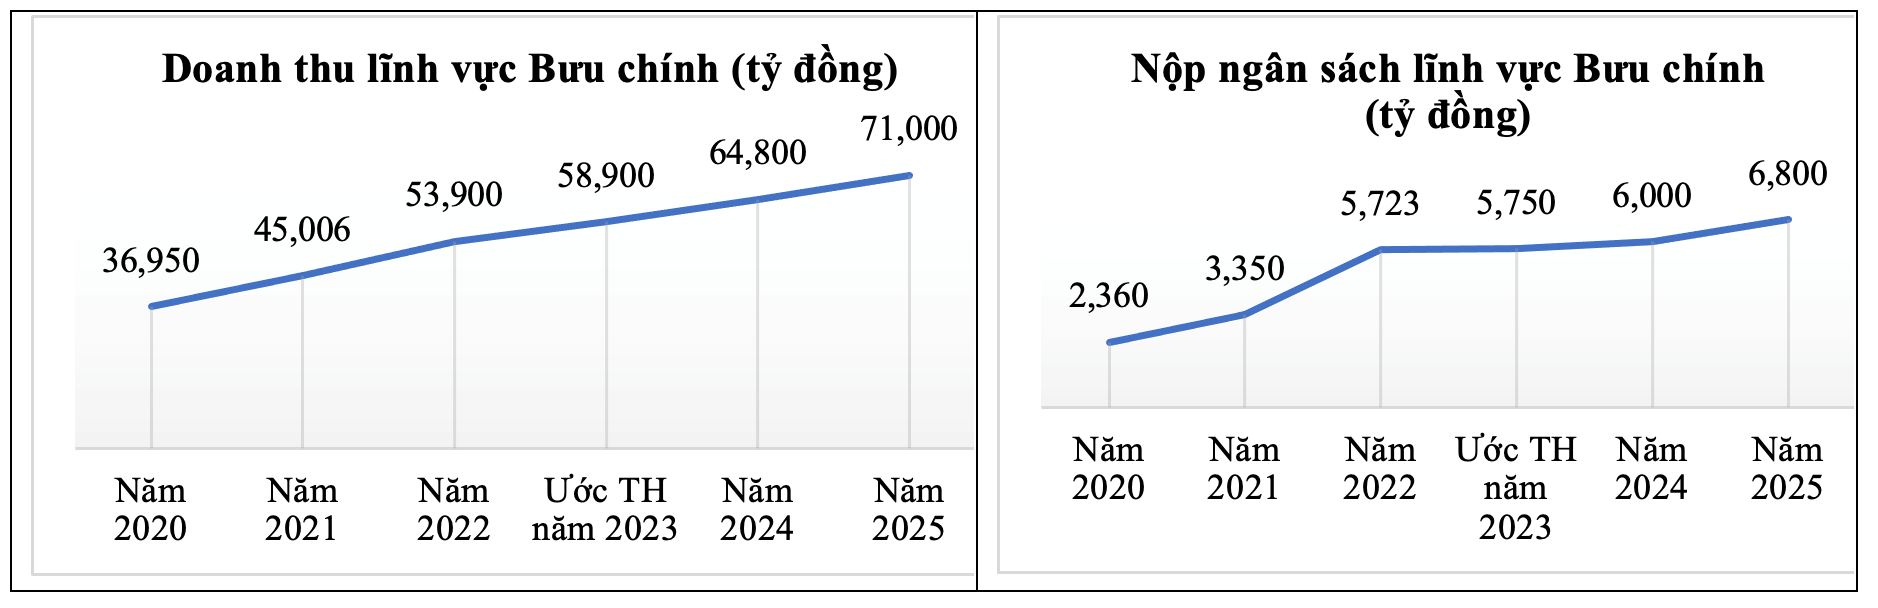 doanh-thu-buu-chinh-2023.png